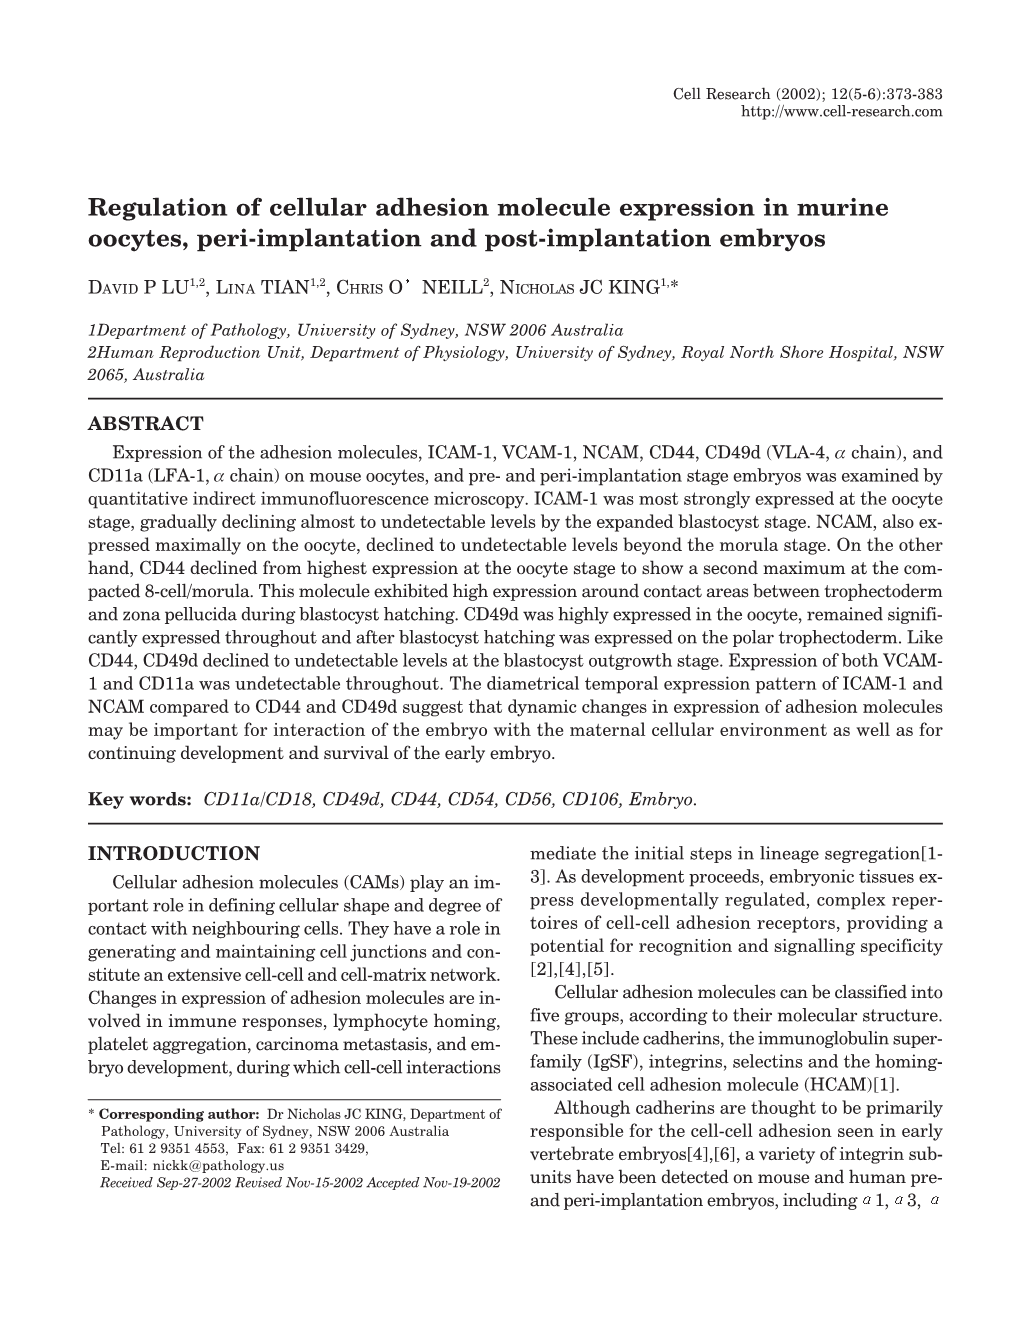 Regulation of Cellular Adhesion Molecule Expression in Murine Oocytes, Peri-Implantation and Post-Implantation Embryos